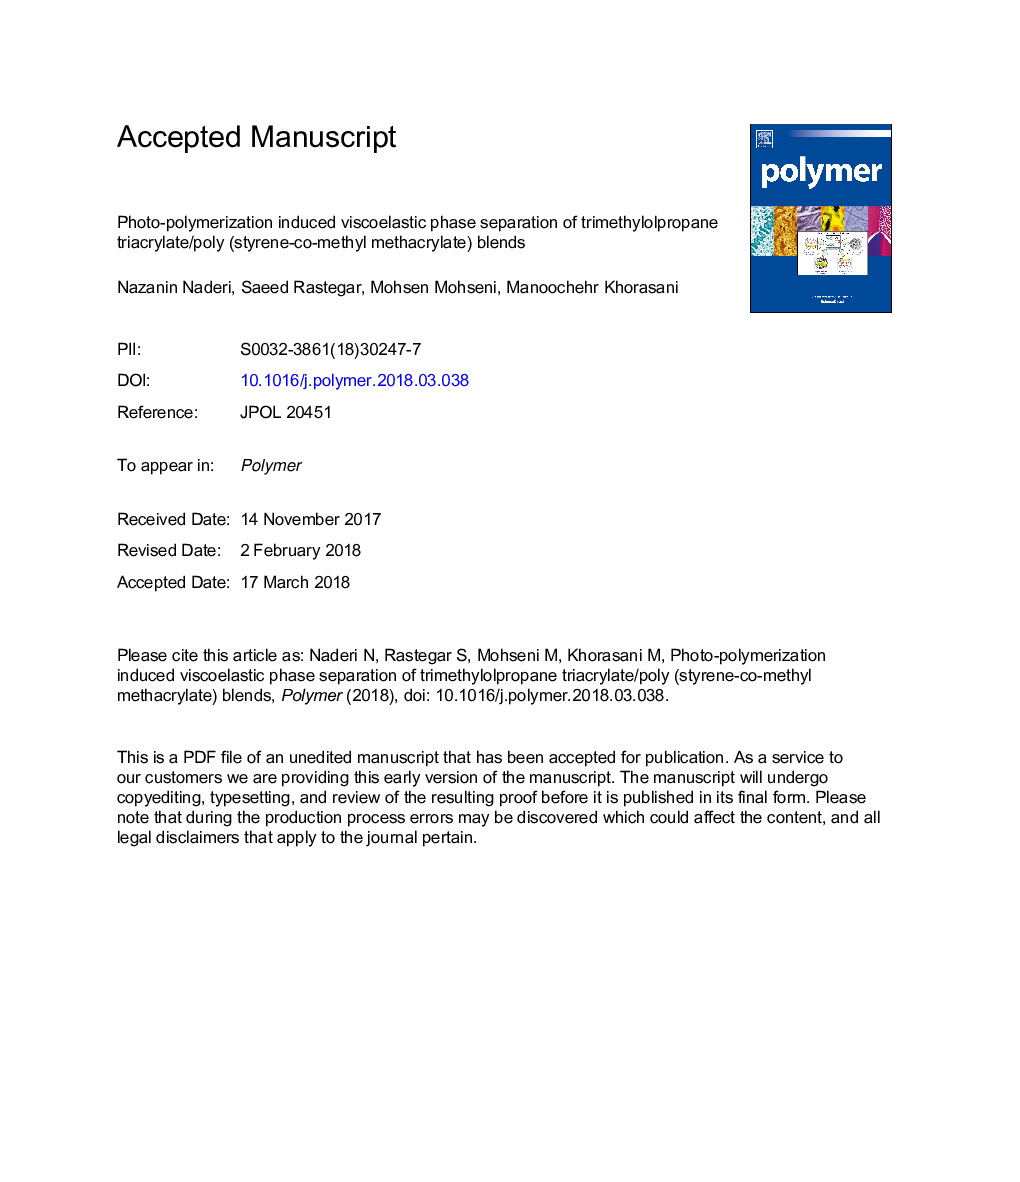 Photo-polymerization induced viscoelastic phase separation of trimethylolpropane triacrylate/poly (styrene-co-methyl methacrylate) blends